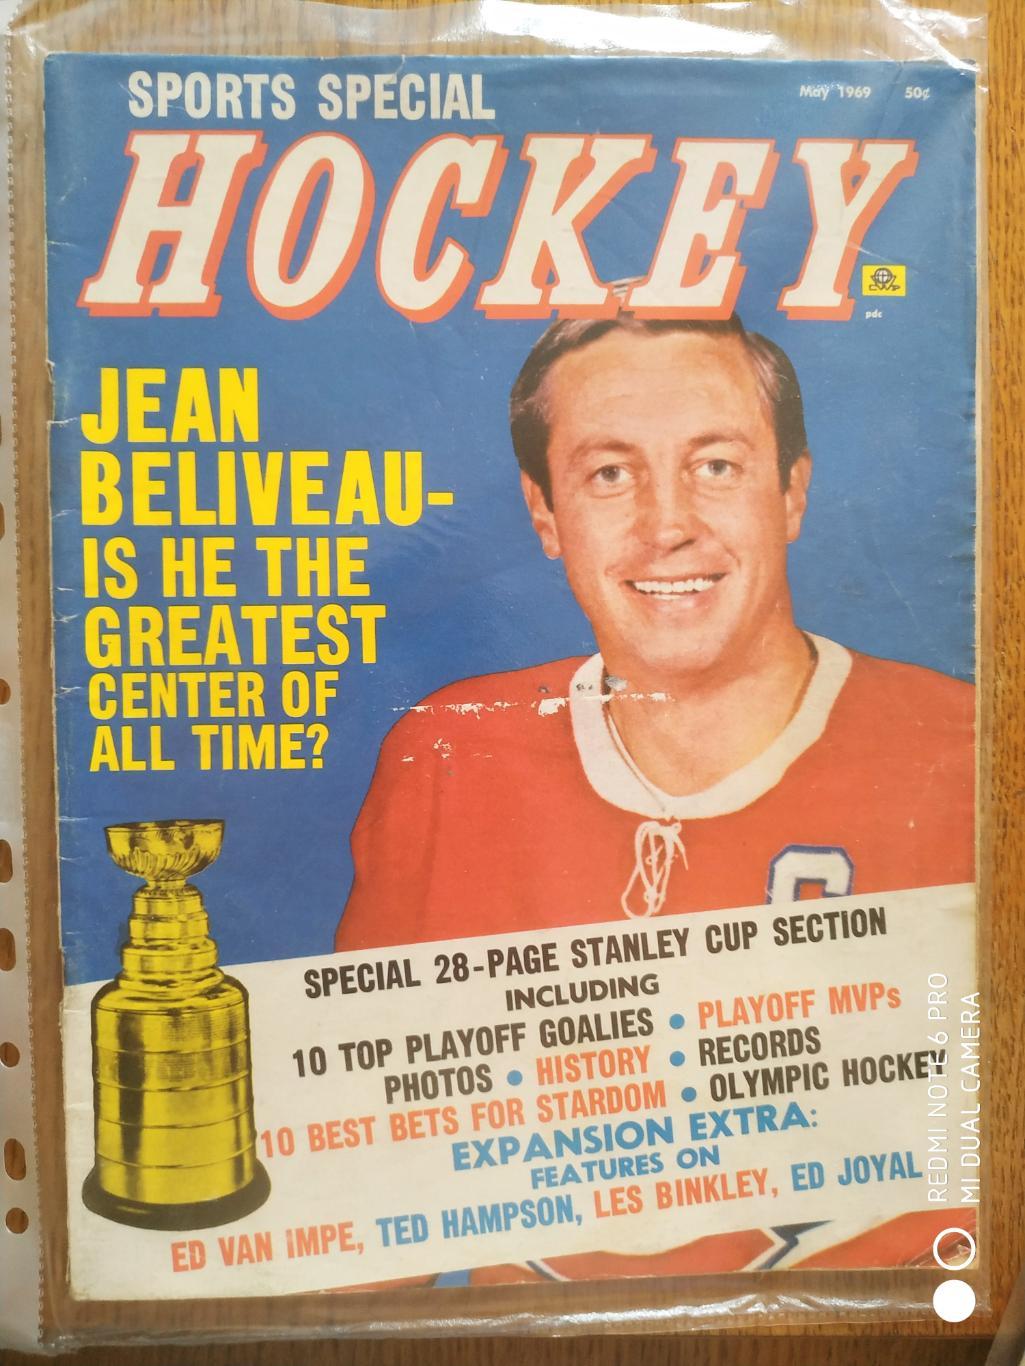 ХОККЕЙ ЖУРНАЛ ЕЖЕМЕСЯЧНИК НХЛ NHL 1969 MAY SPORTS SPECIAL HOCKEY